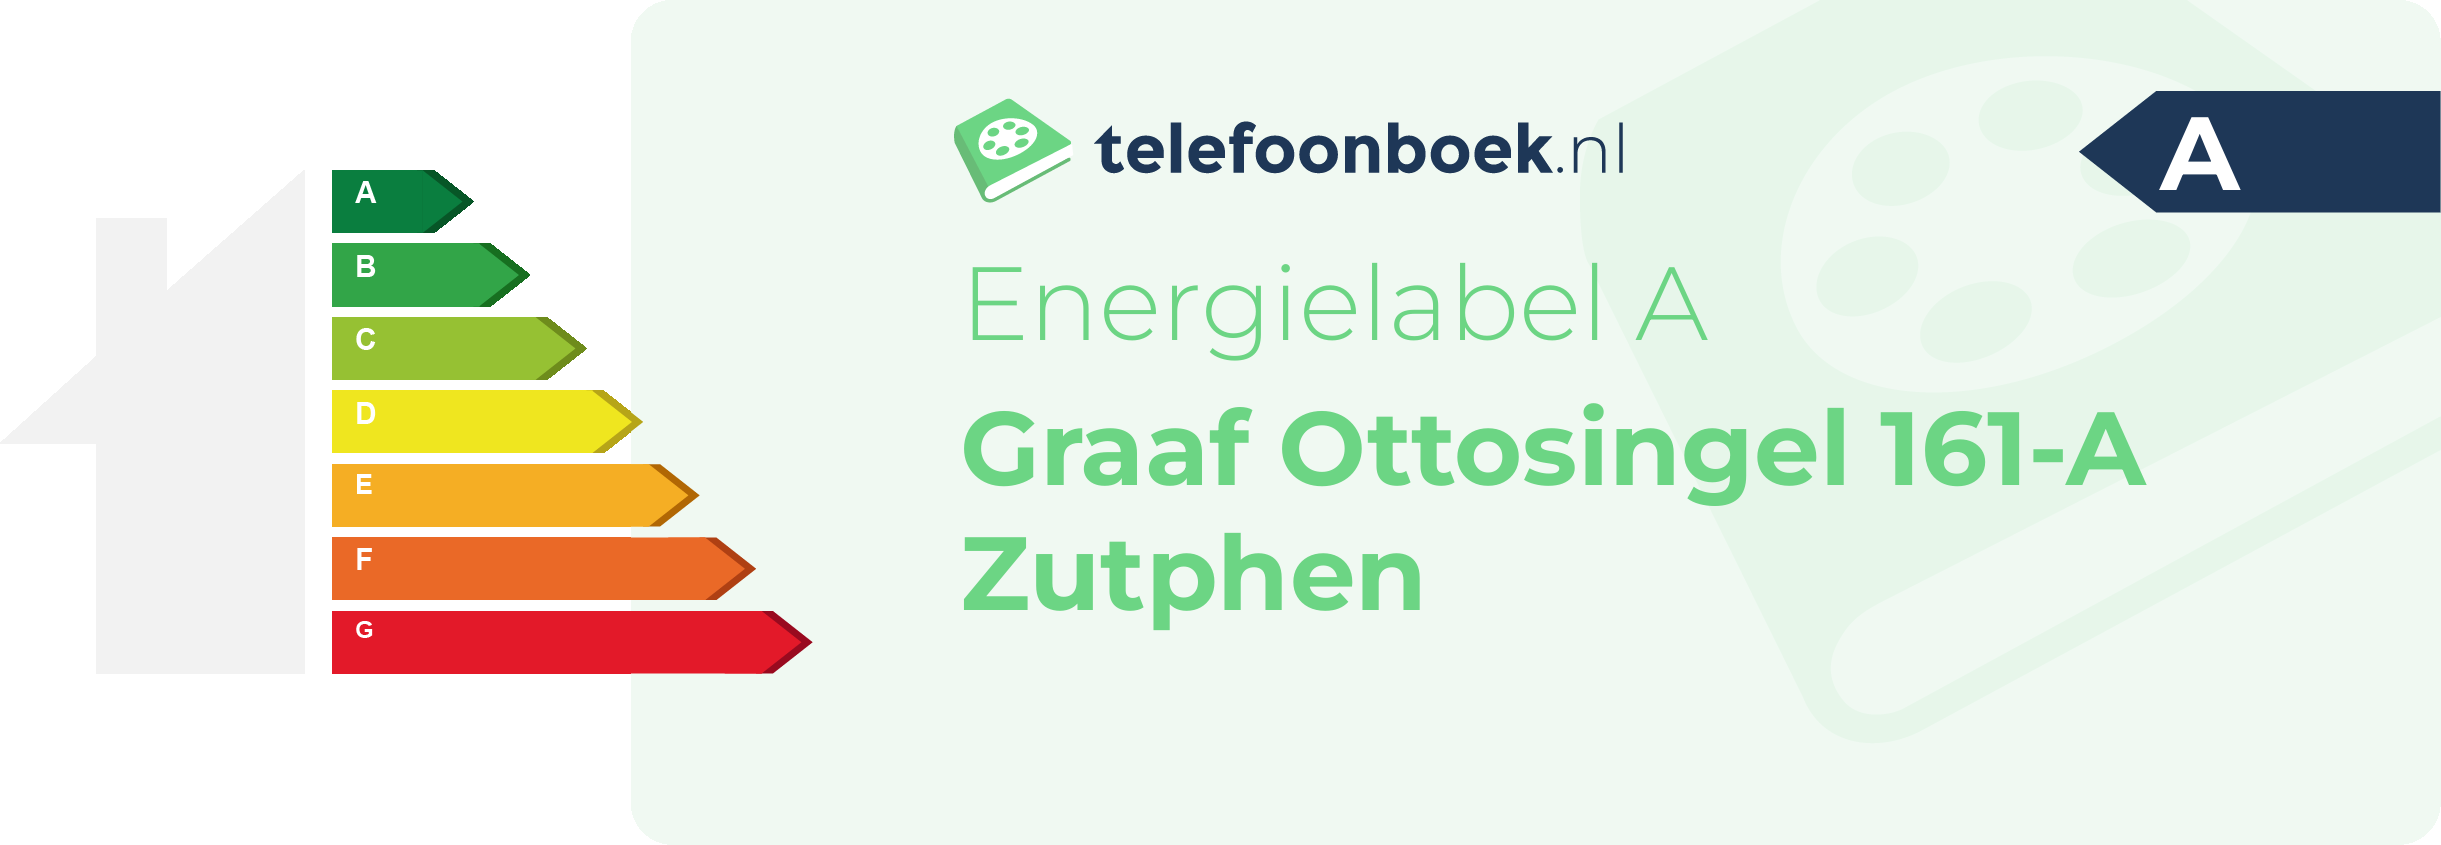 Energielabel Graaf Ottosingel 161-A Zutphen